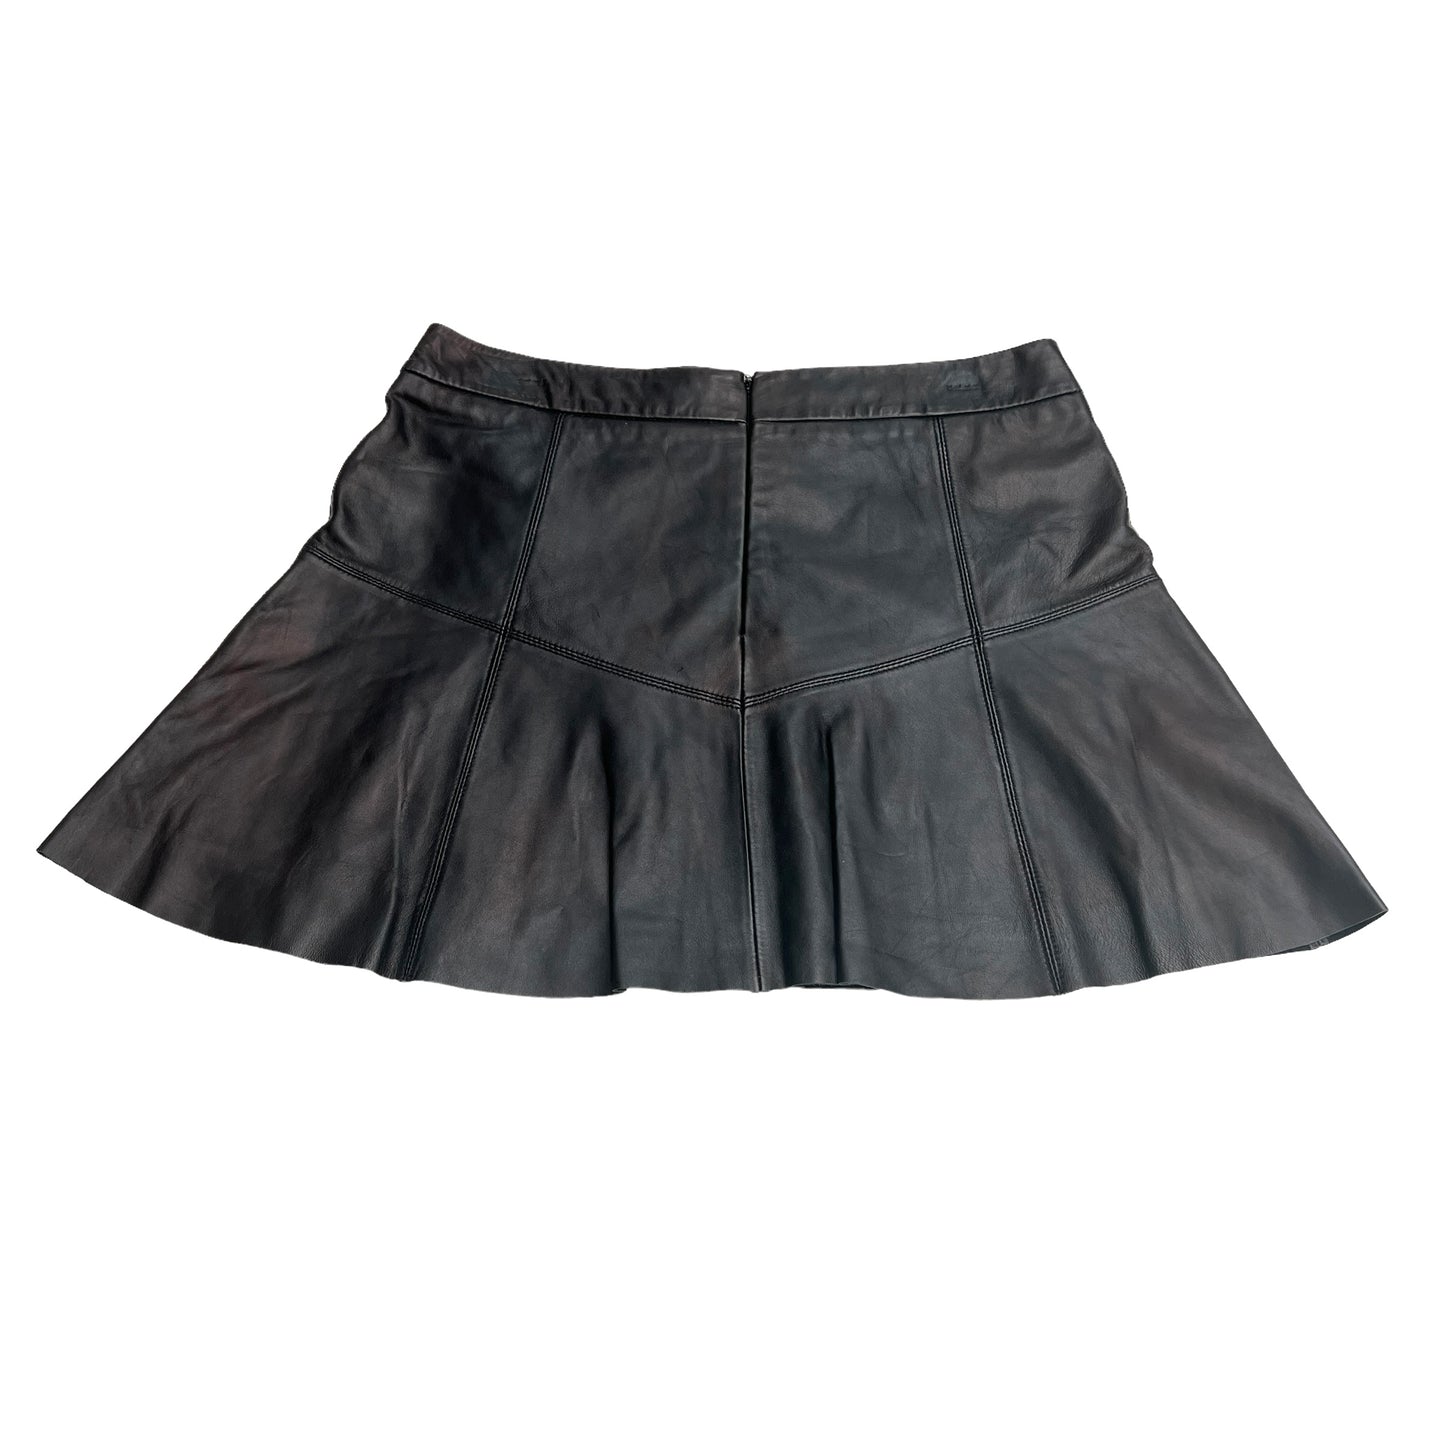 Black Leather Mini Skirt - M